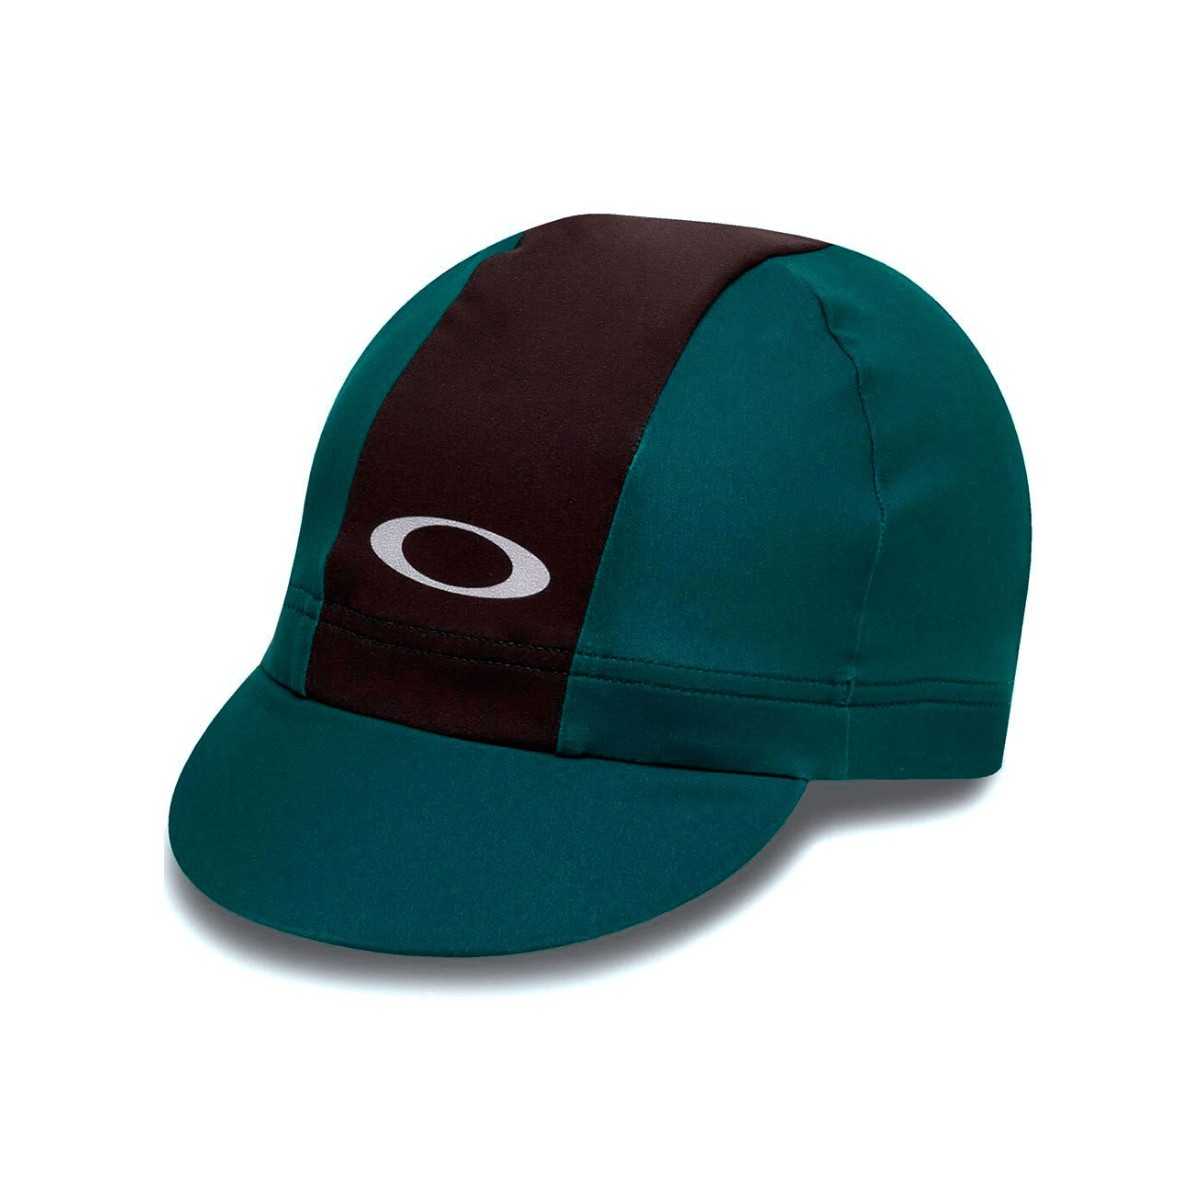 Oakley Cap 2.0 Green Cap, Size S/M